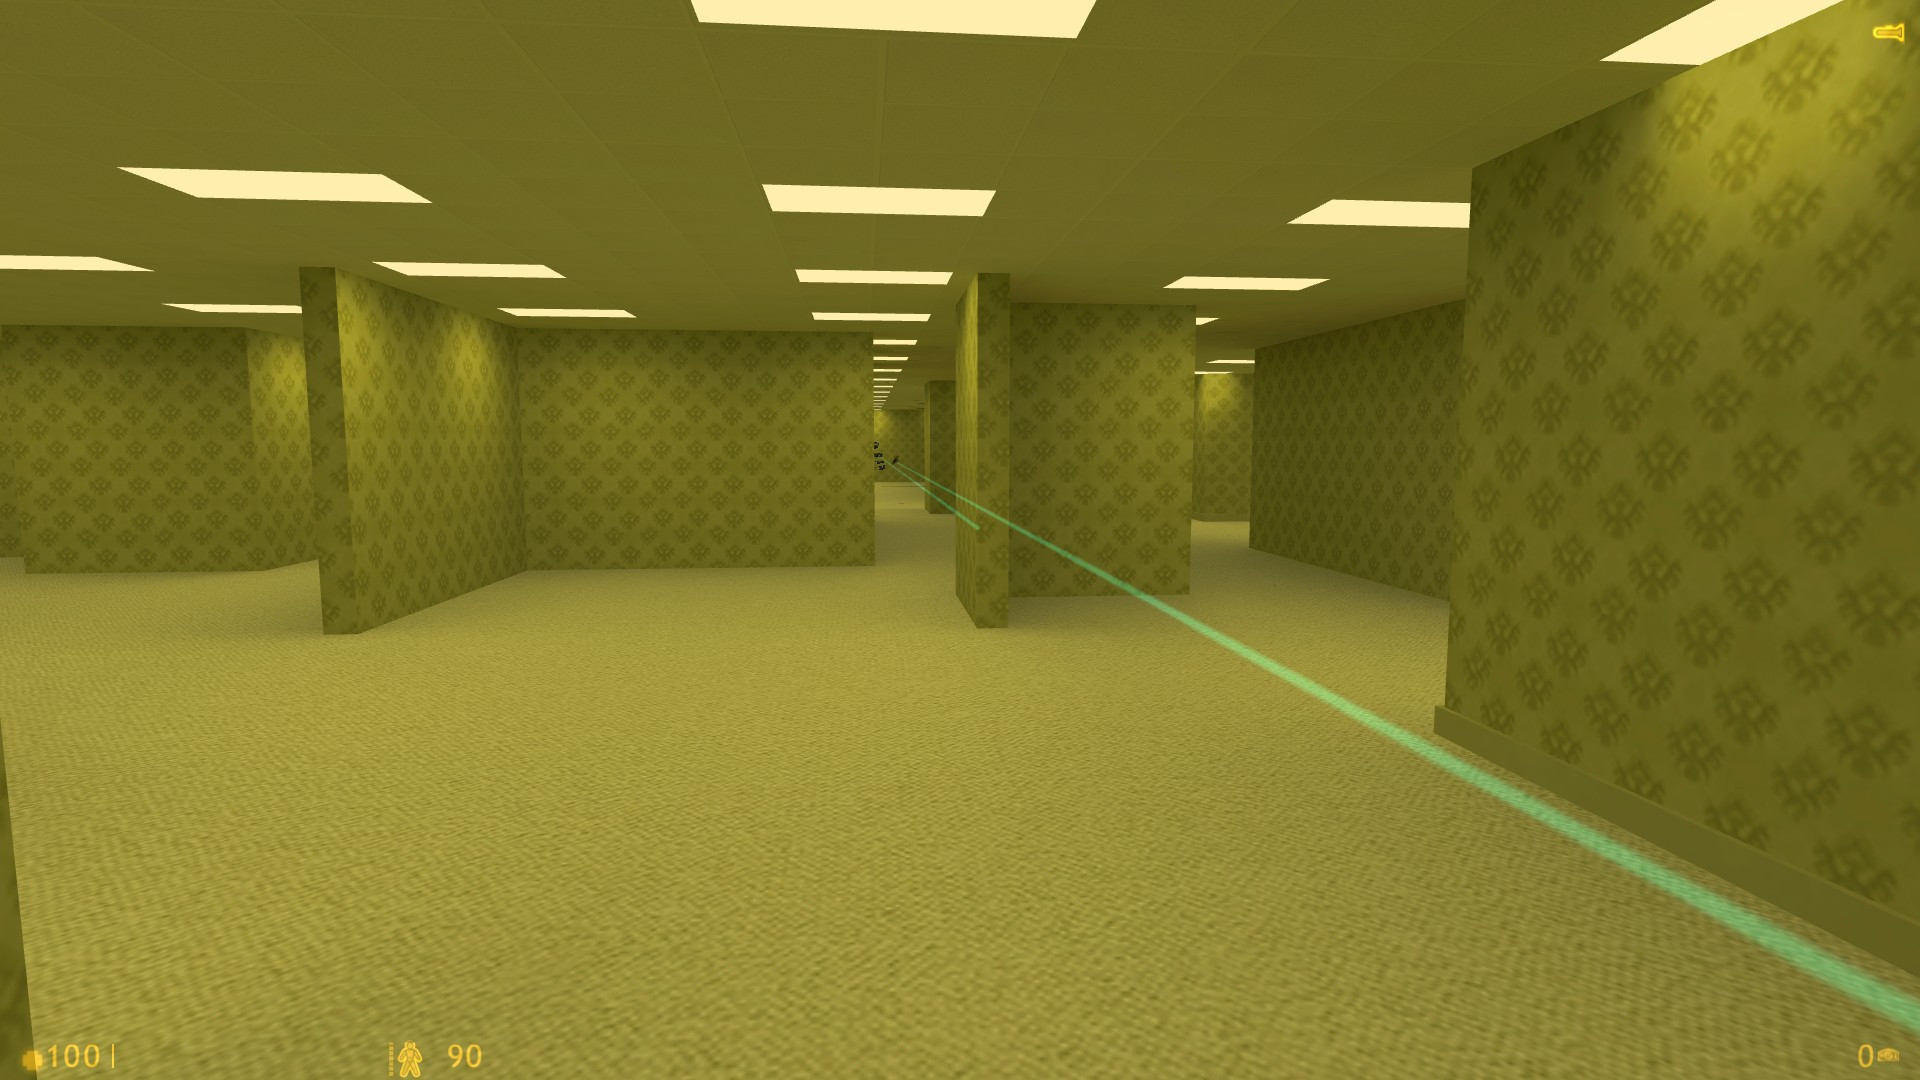 level 0 file - The Backrooms mod for Half-Life - ModDB